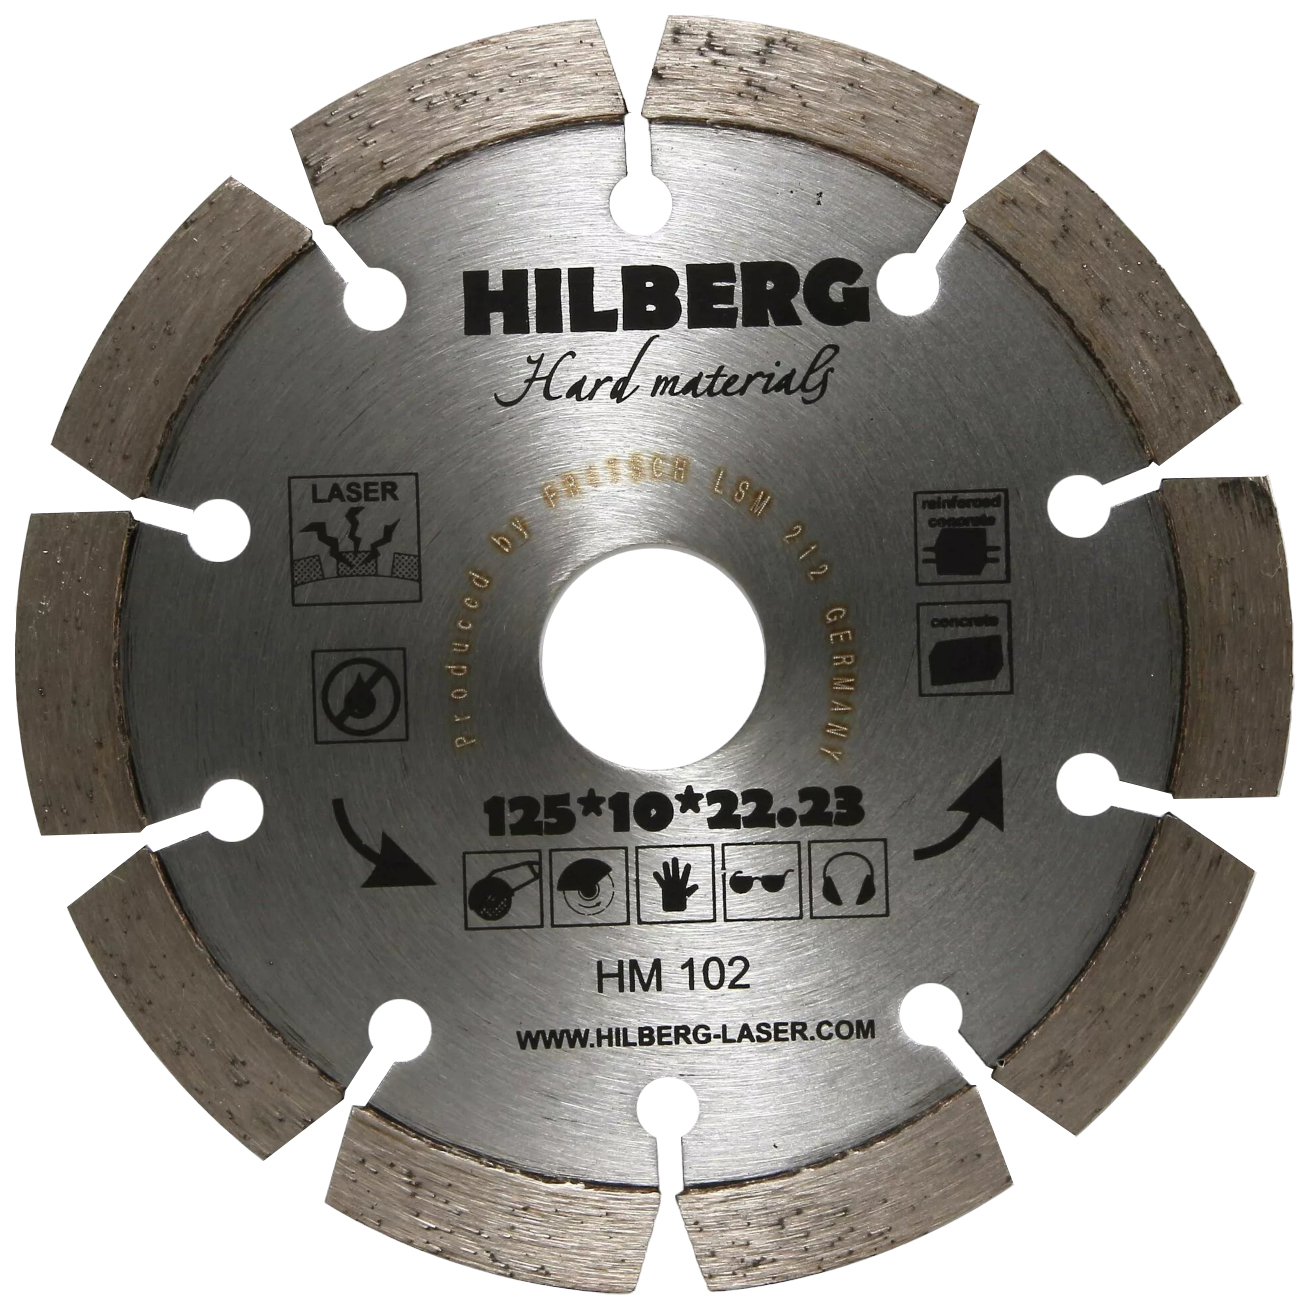 фото Hilberg диск алмазный отрезной 125x22,23 hilberg hard materials лазер hm102